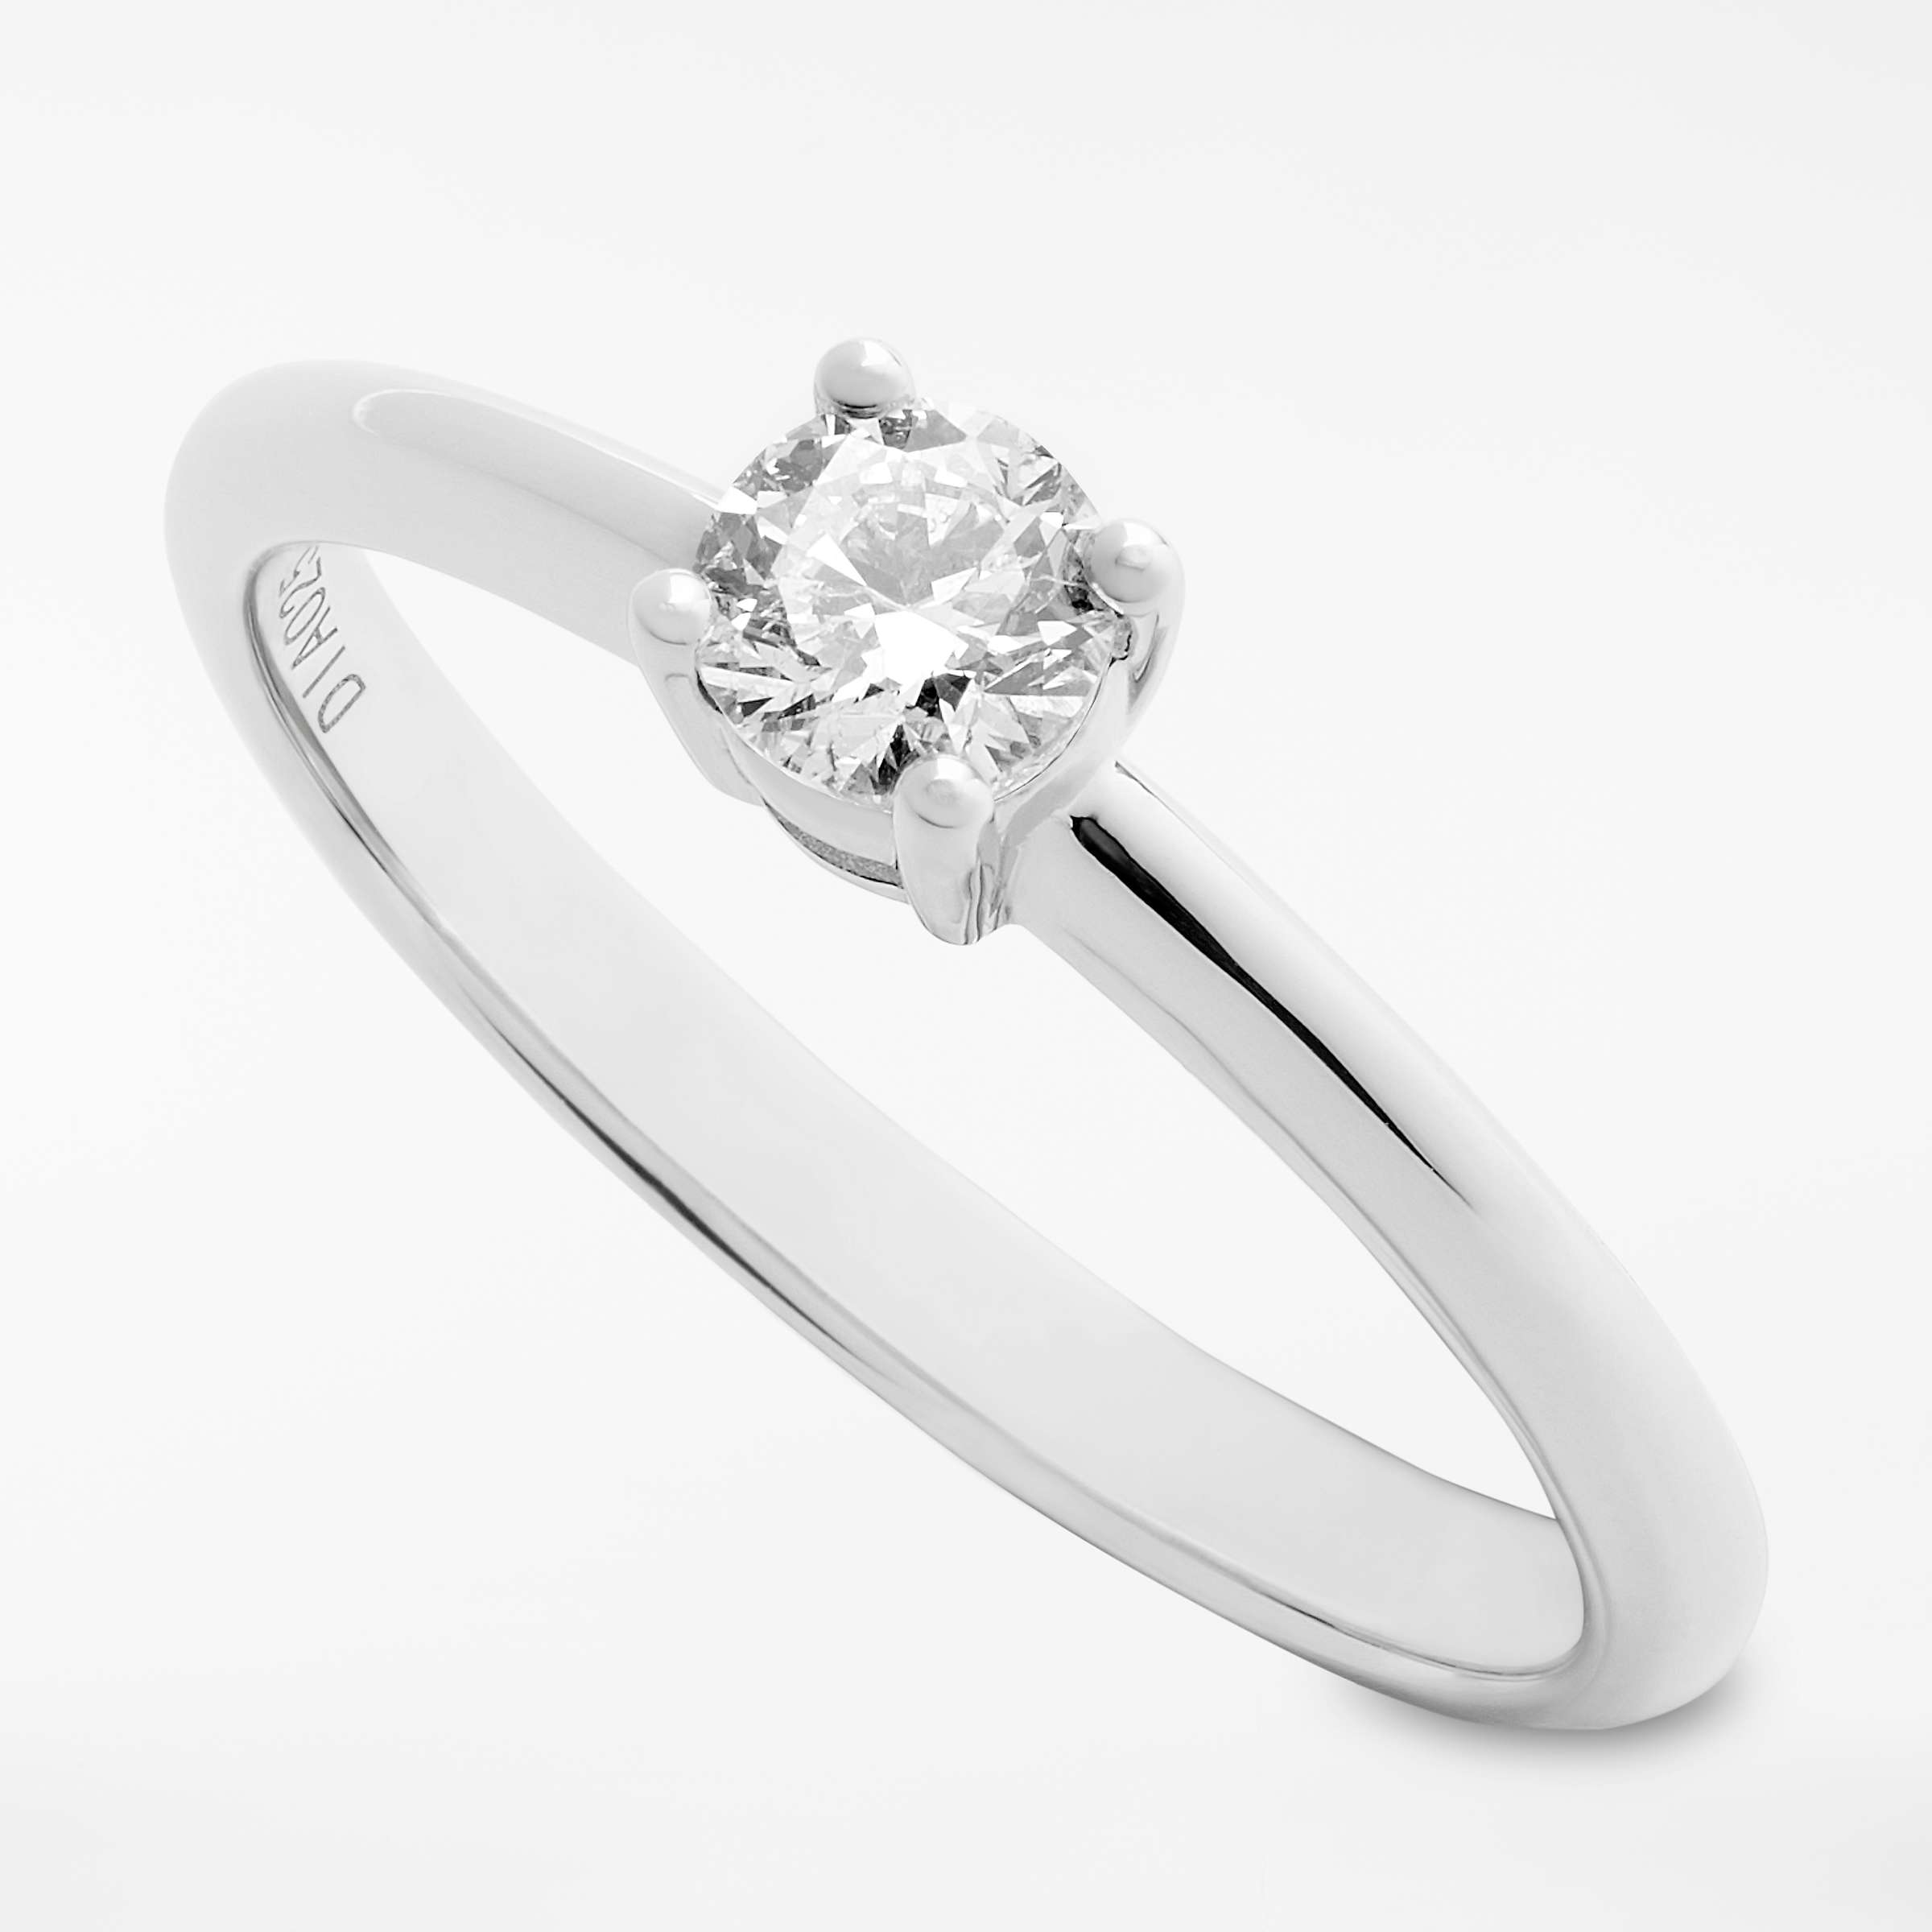 Buy Mogul 18ct White Gold Round Brilliant Diamond Engagement Ring, 0.25ct Online at johnlewis.com